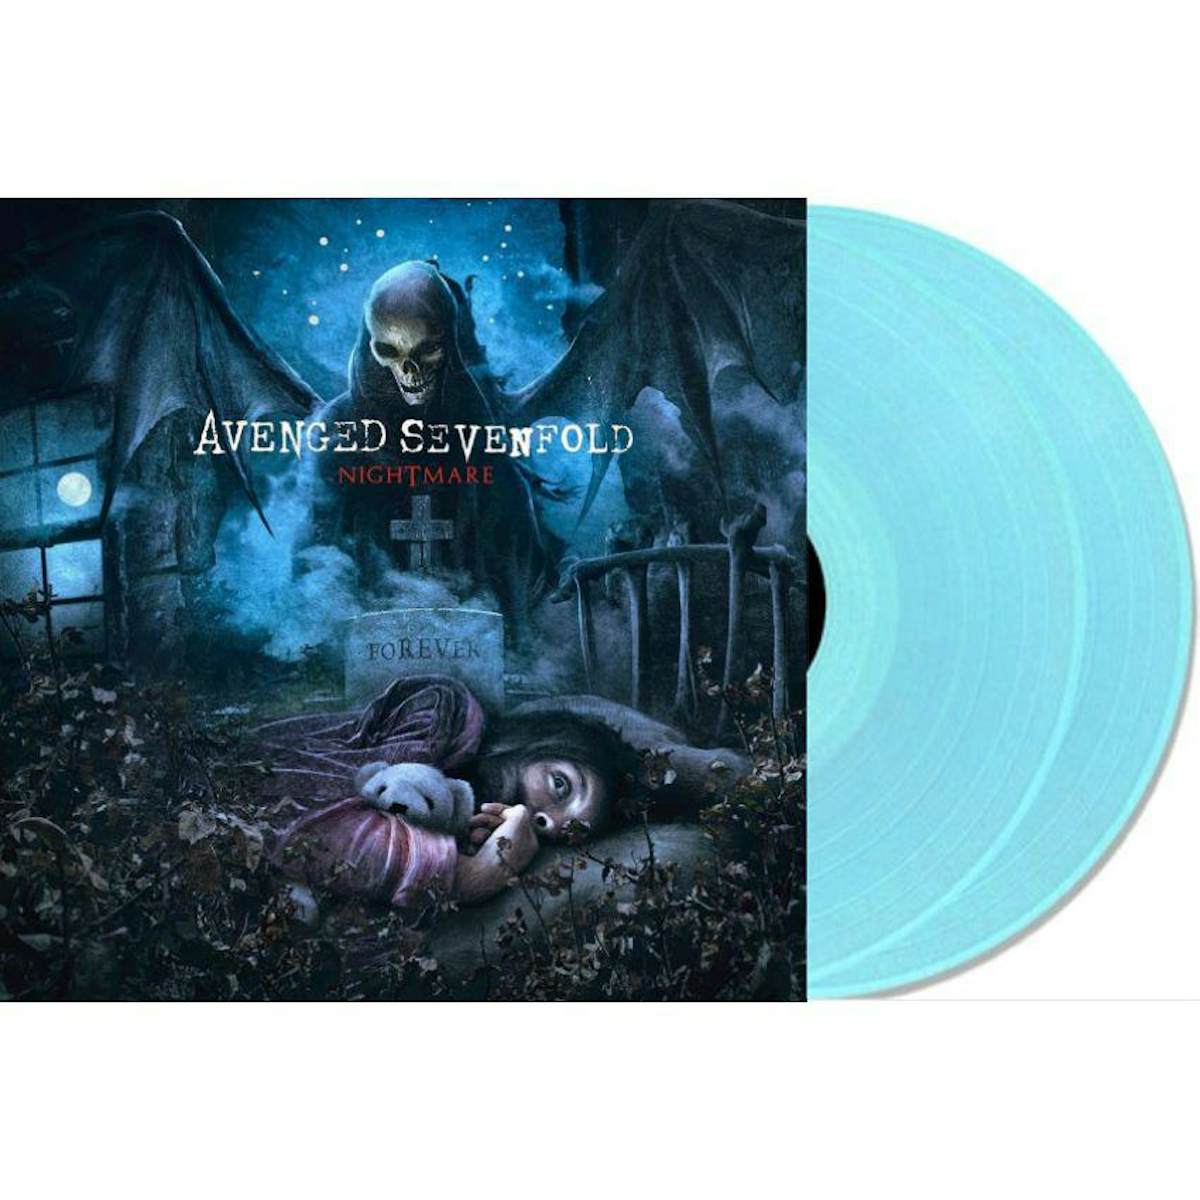 Avenged Sevenfold Nightmare (Transparent Blue) Vinyl Record